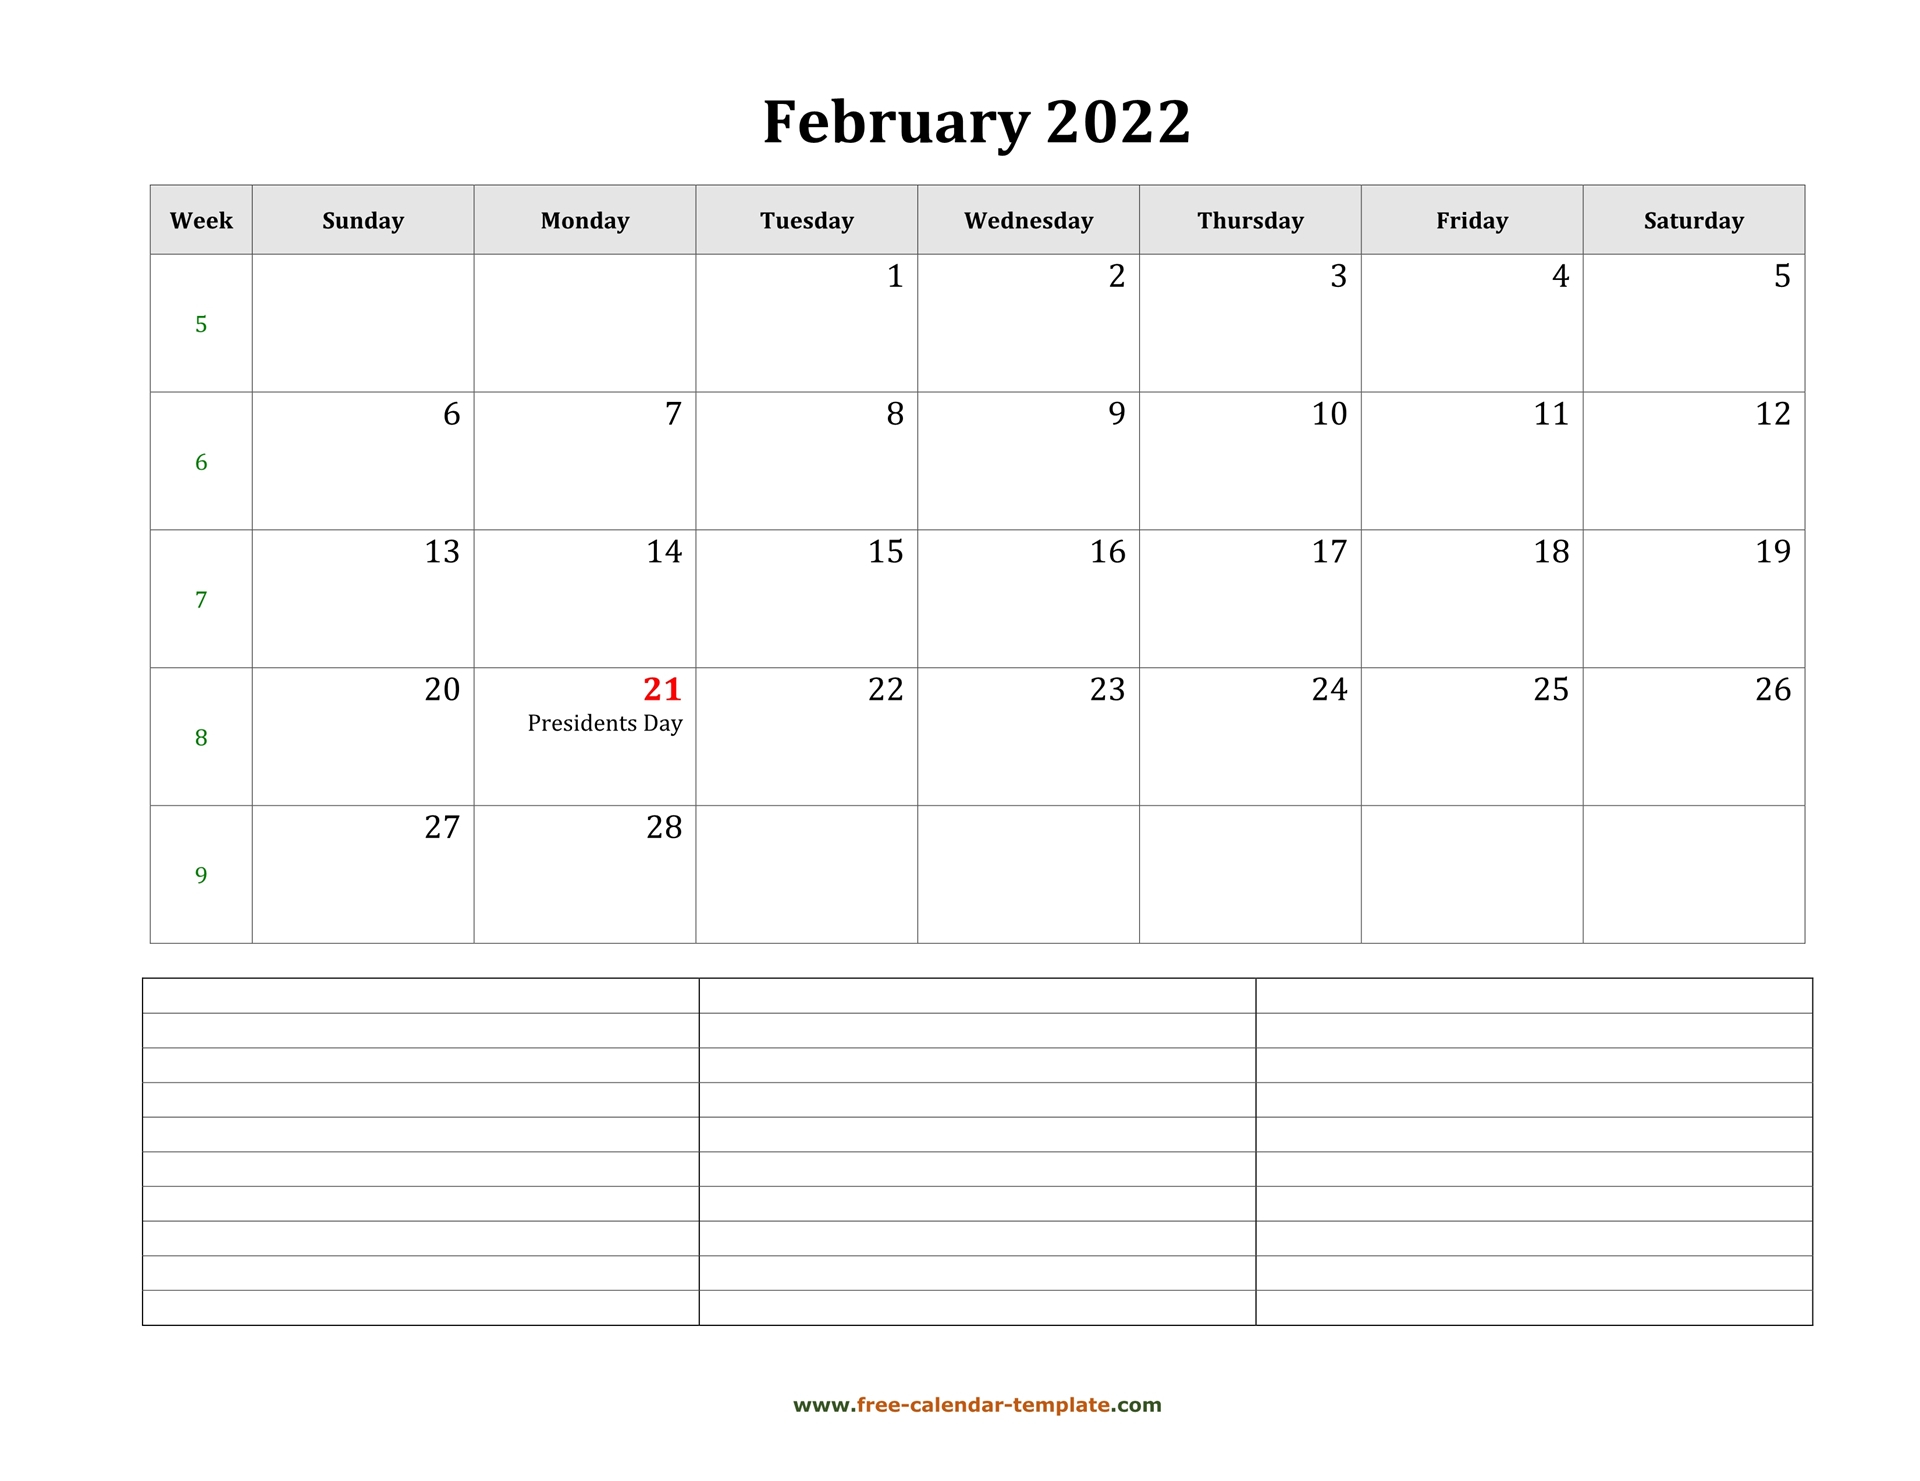 February 2022 Free Calendar Tempplate | Free-Calendar